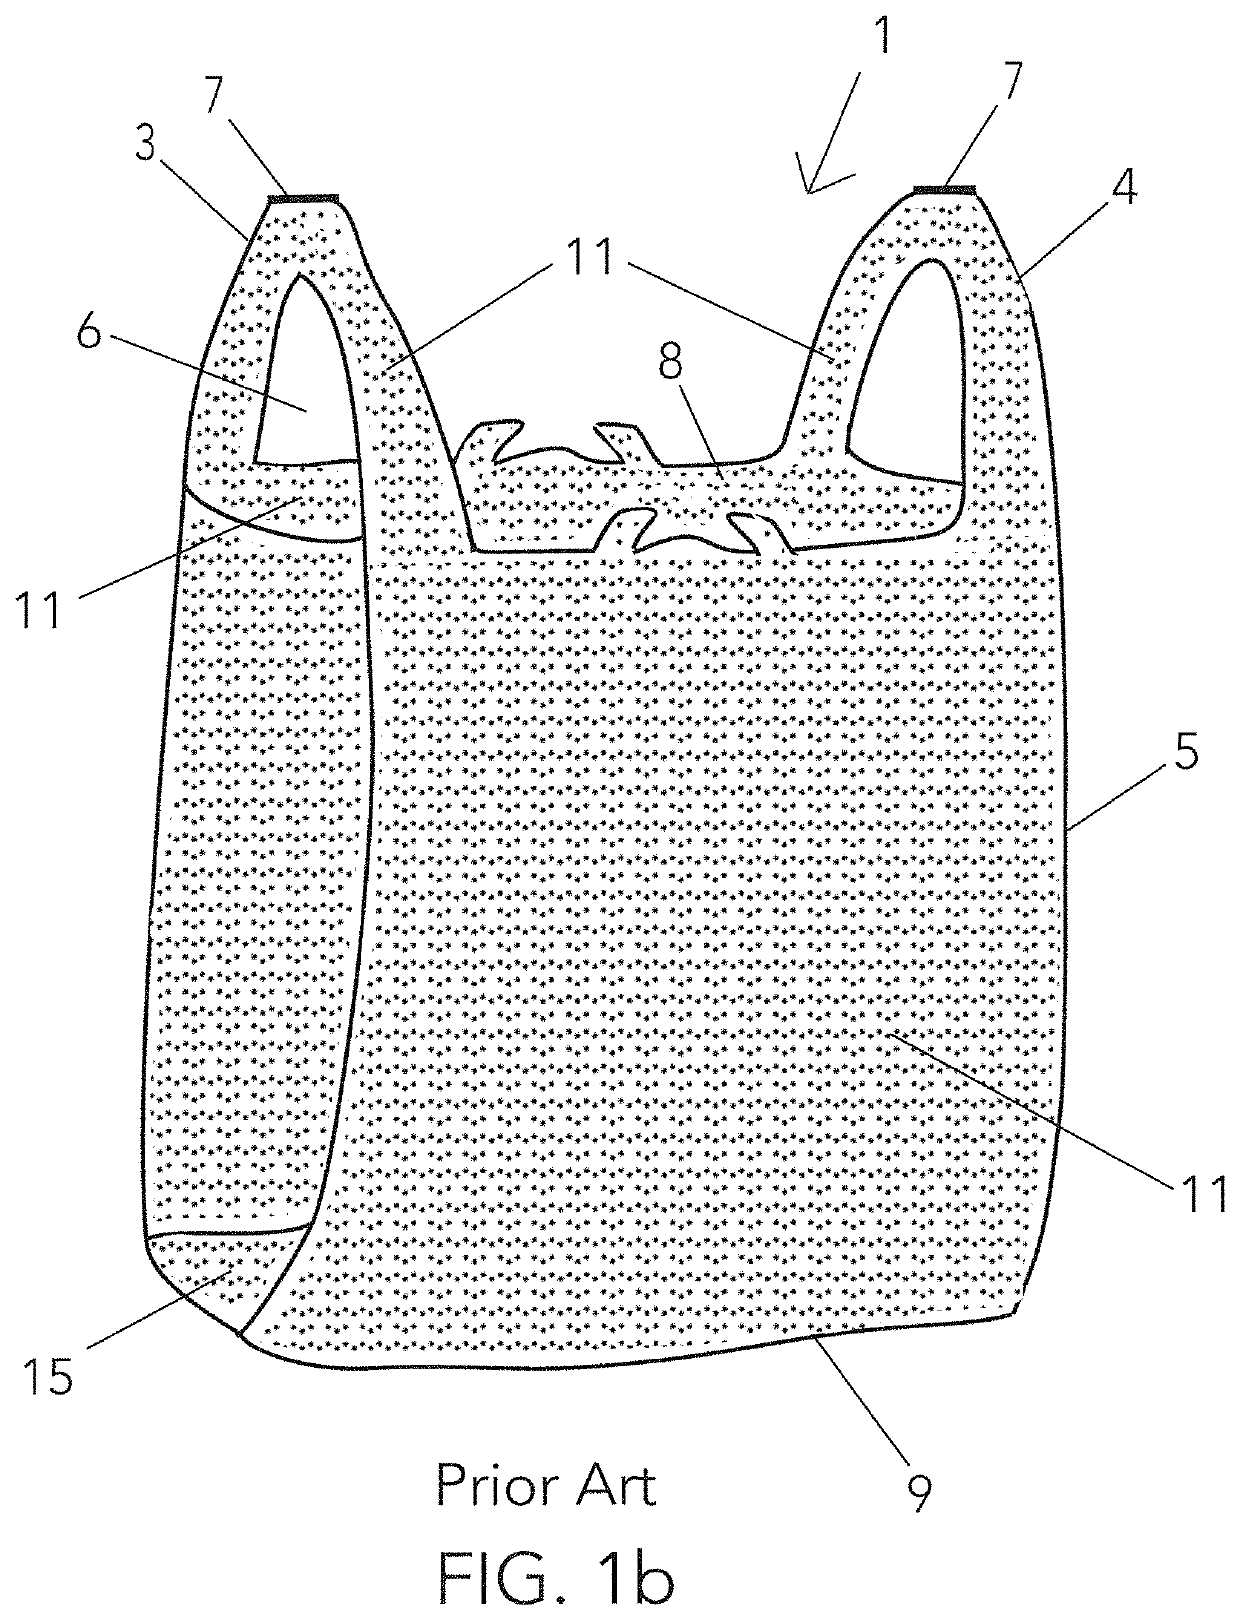 Plastic bag with visible distinguishable characteristics